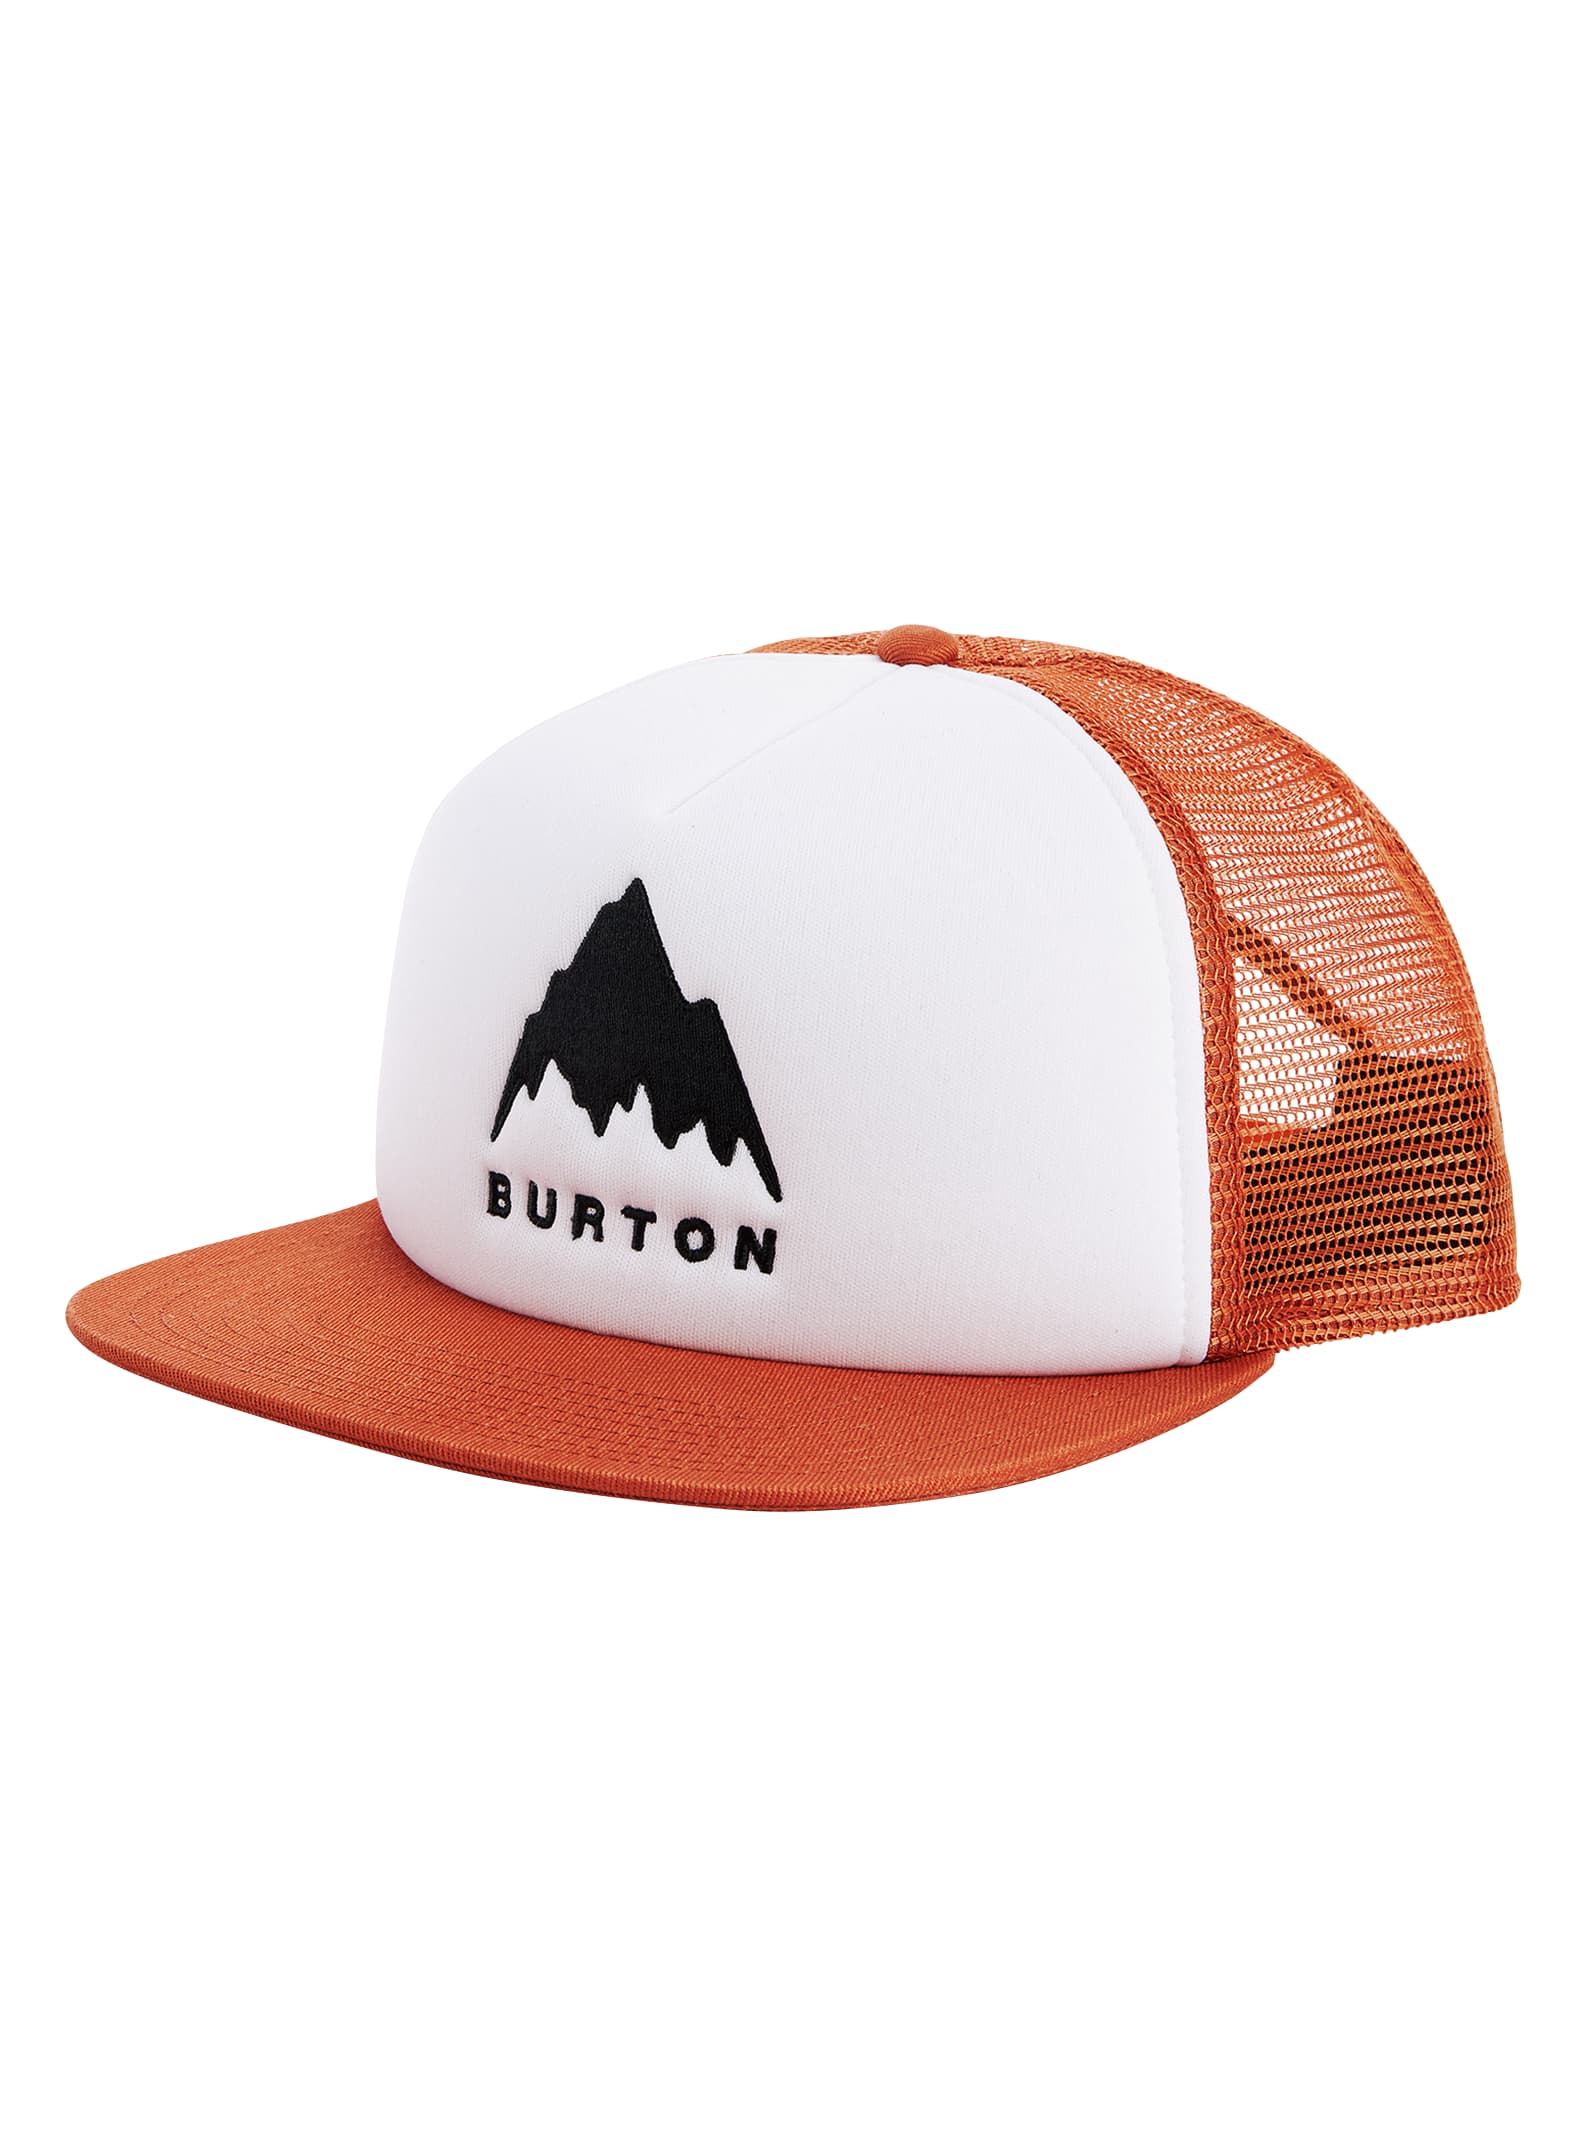 Men's Hats & Beanies | Burton Snowboards US